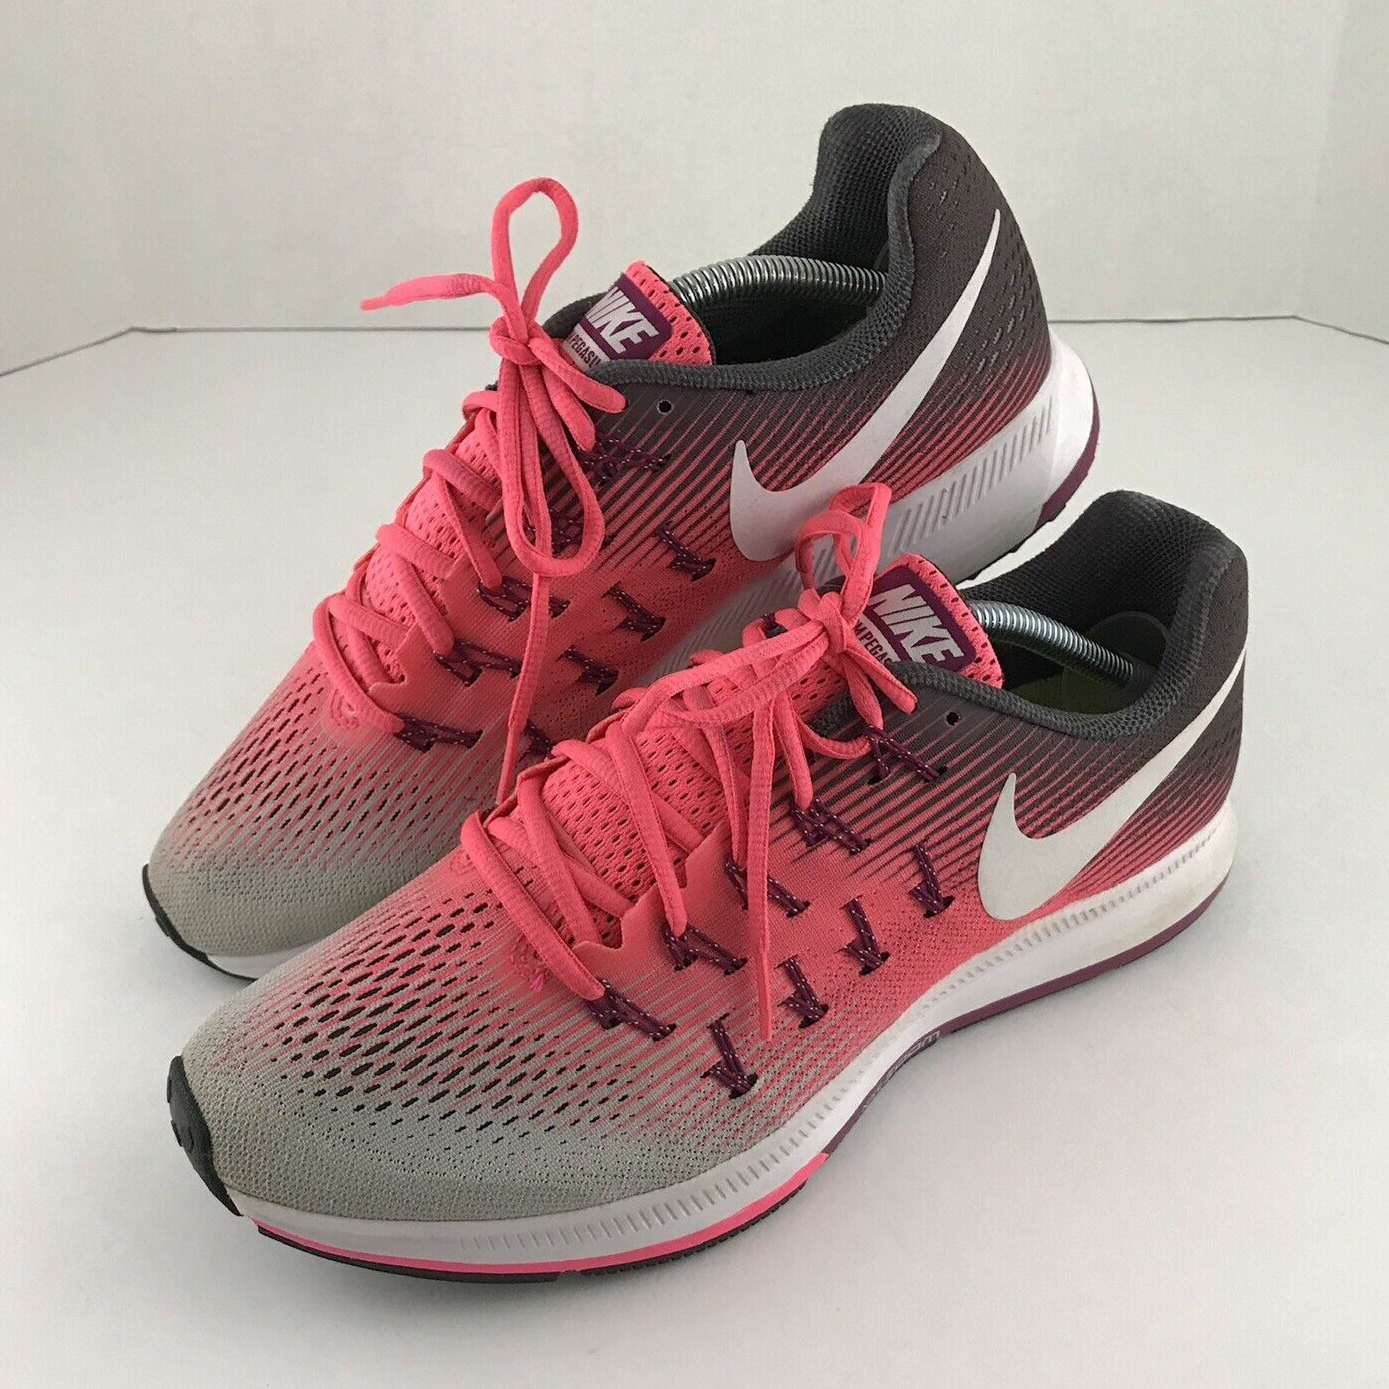 Nike Womens Zoom Pegasus 33 Running Shoes Hot Pink Size 11.5 |